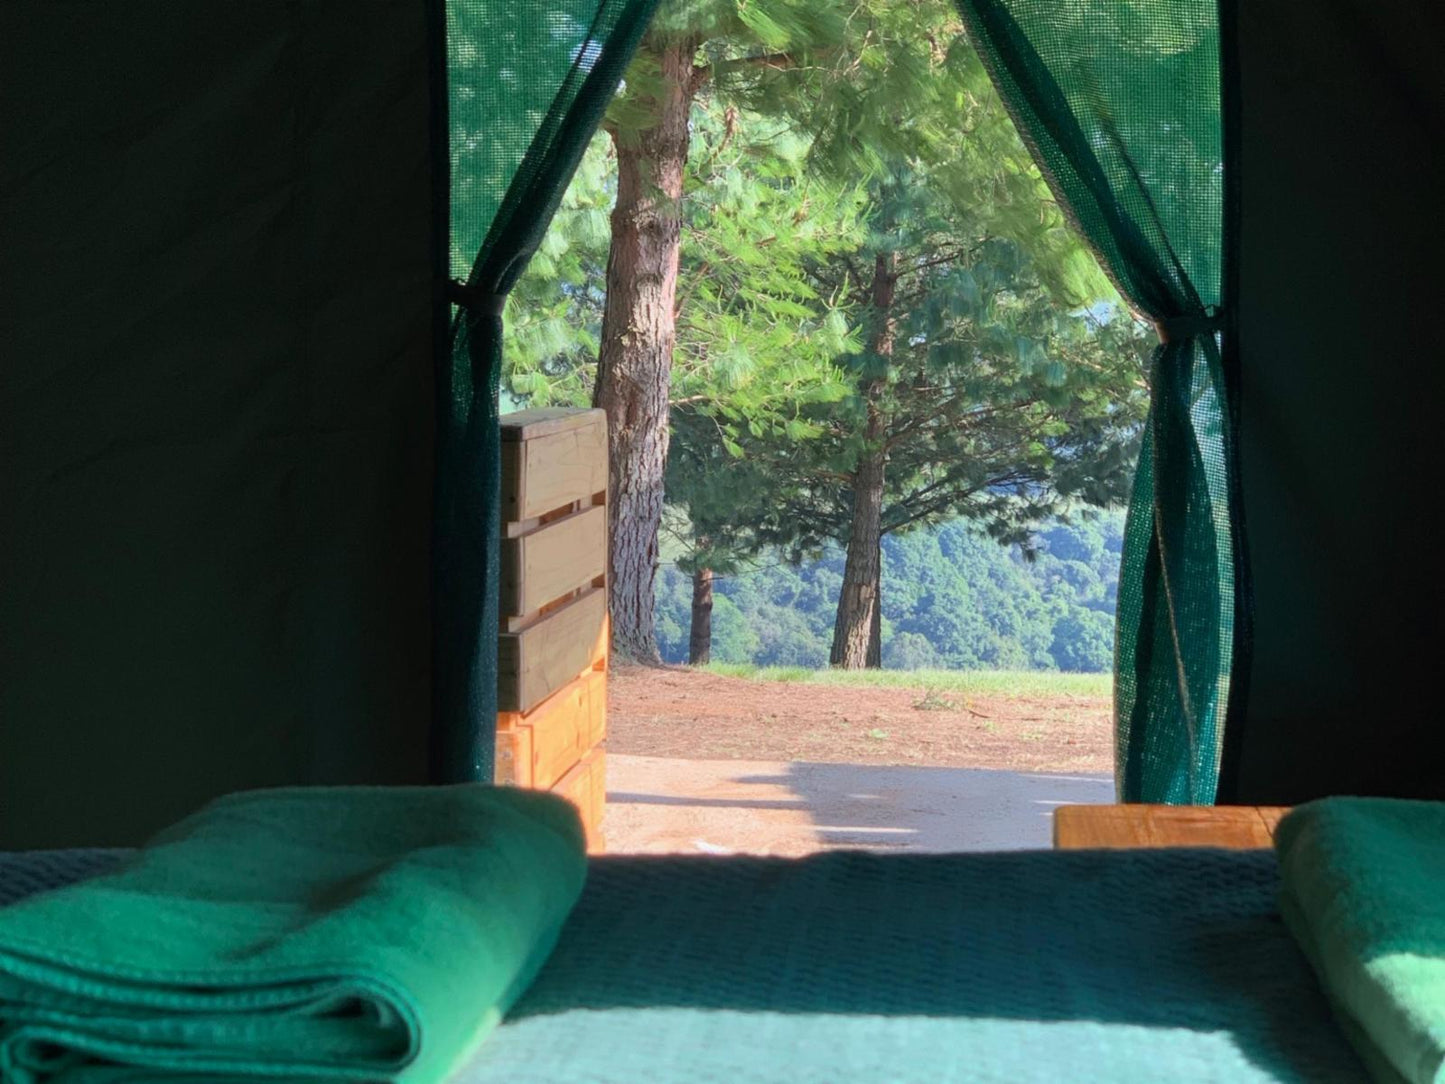 Safari Tent 4 sleeper @ Dargle Forest Lodge